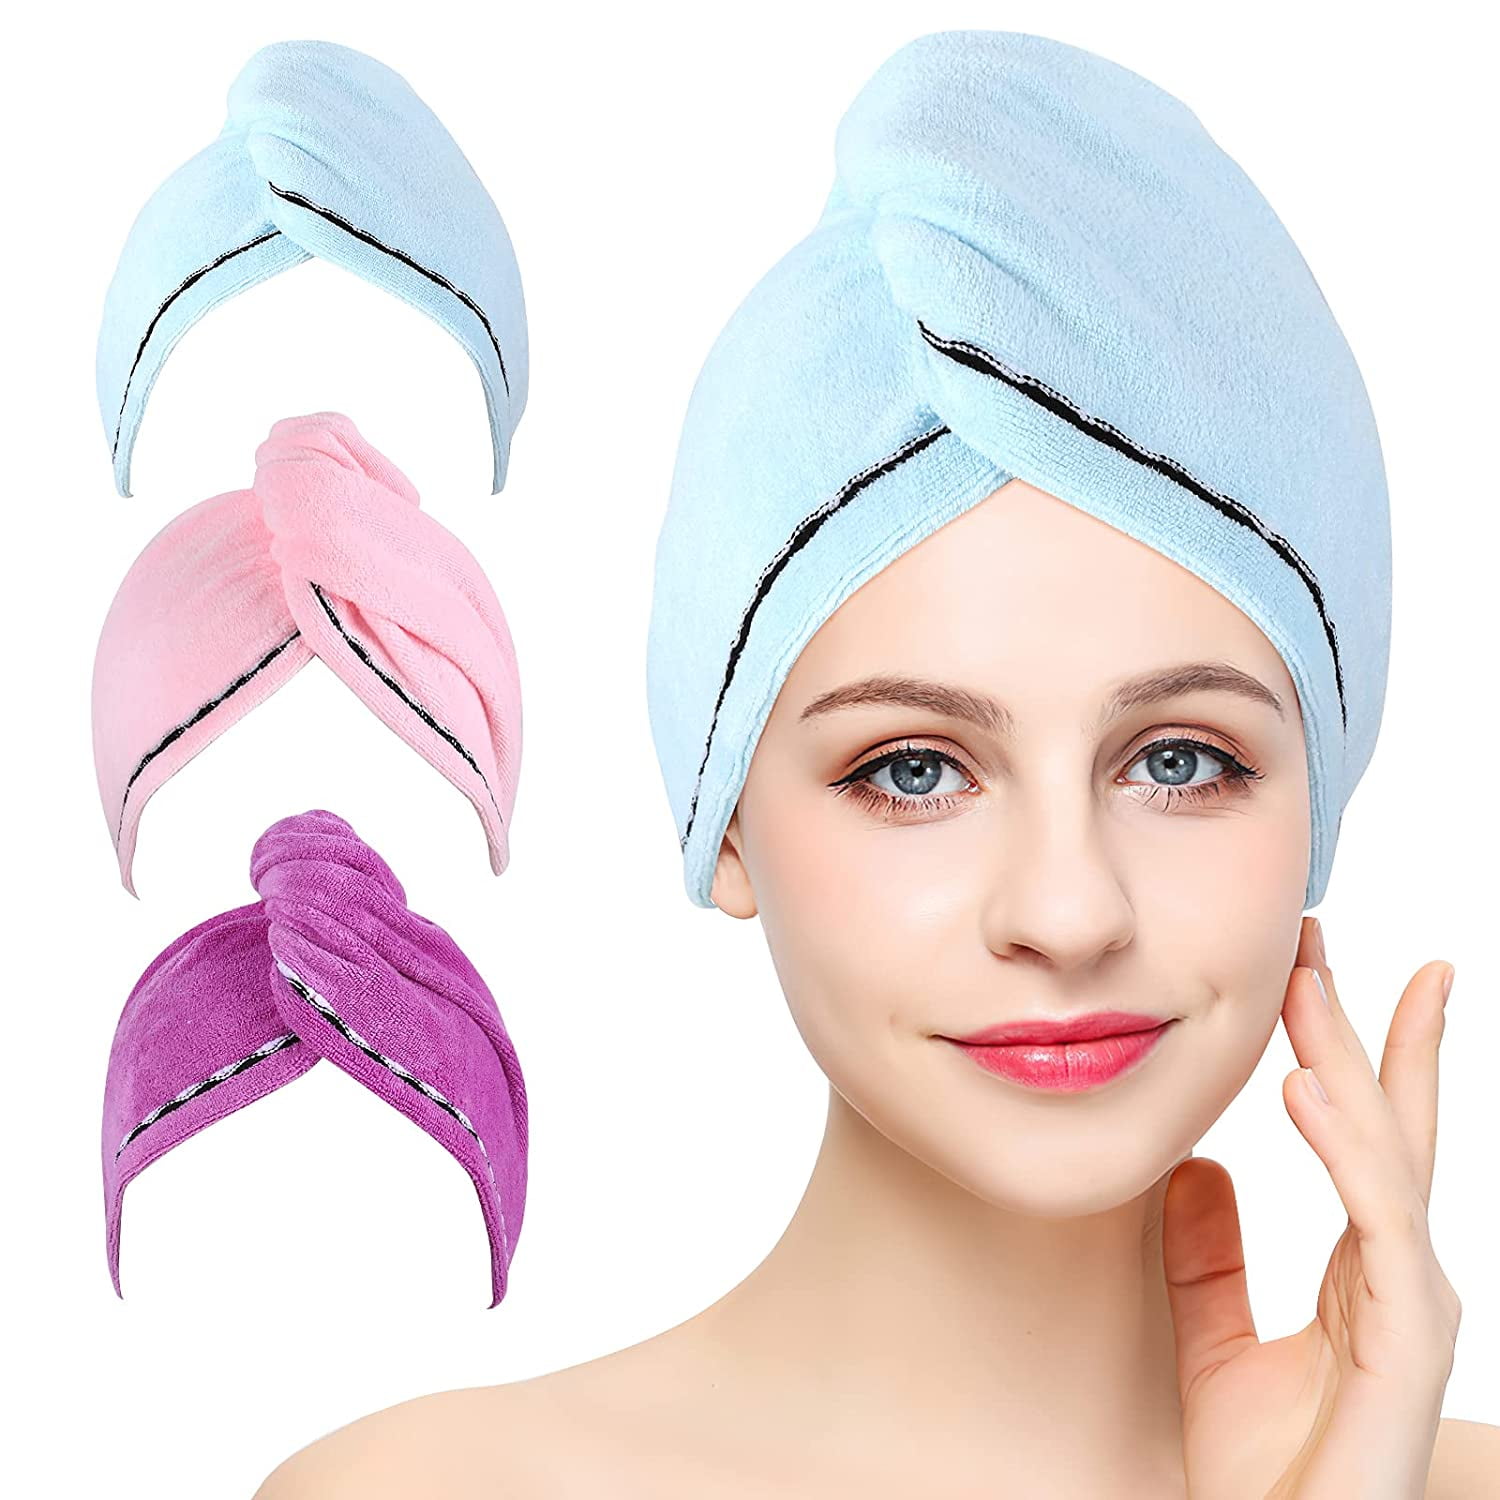 bathroom hair-drying quick dry hair glove quick dry towels microfiber glove UK 